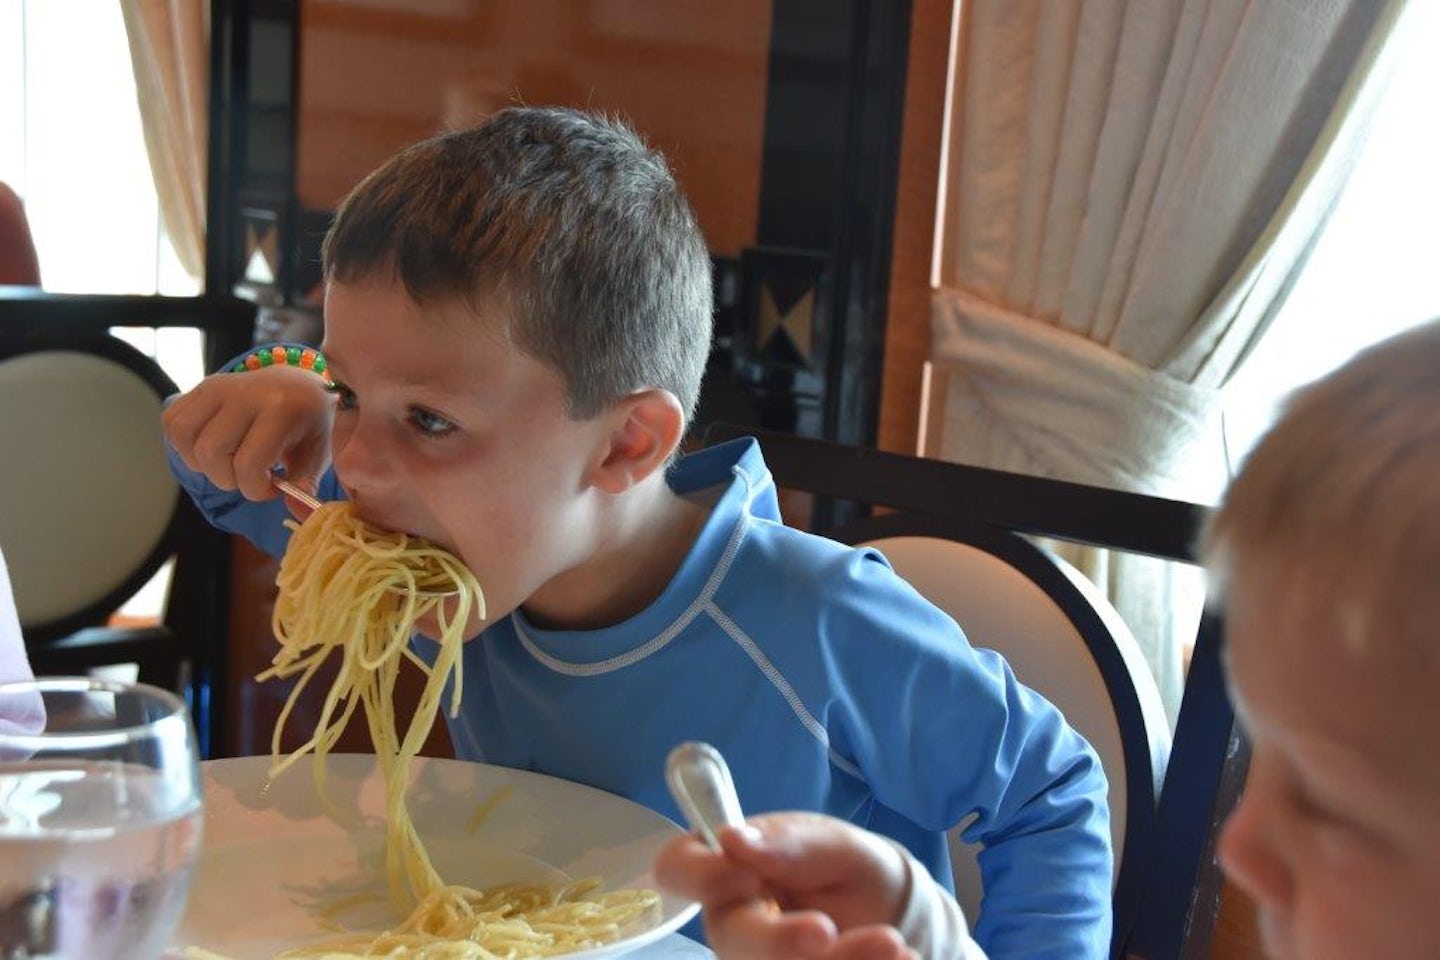 He loved the spaghetti